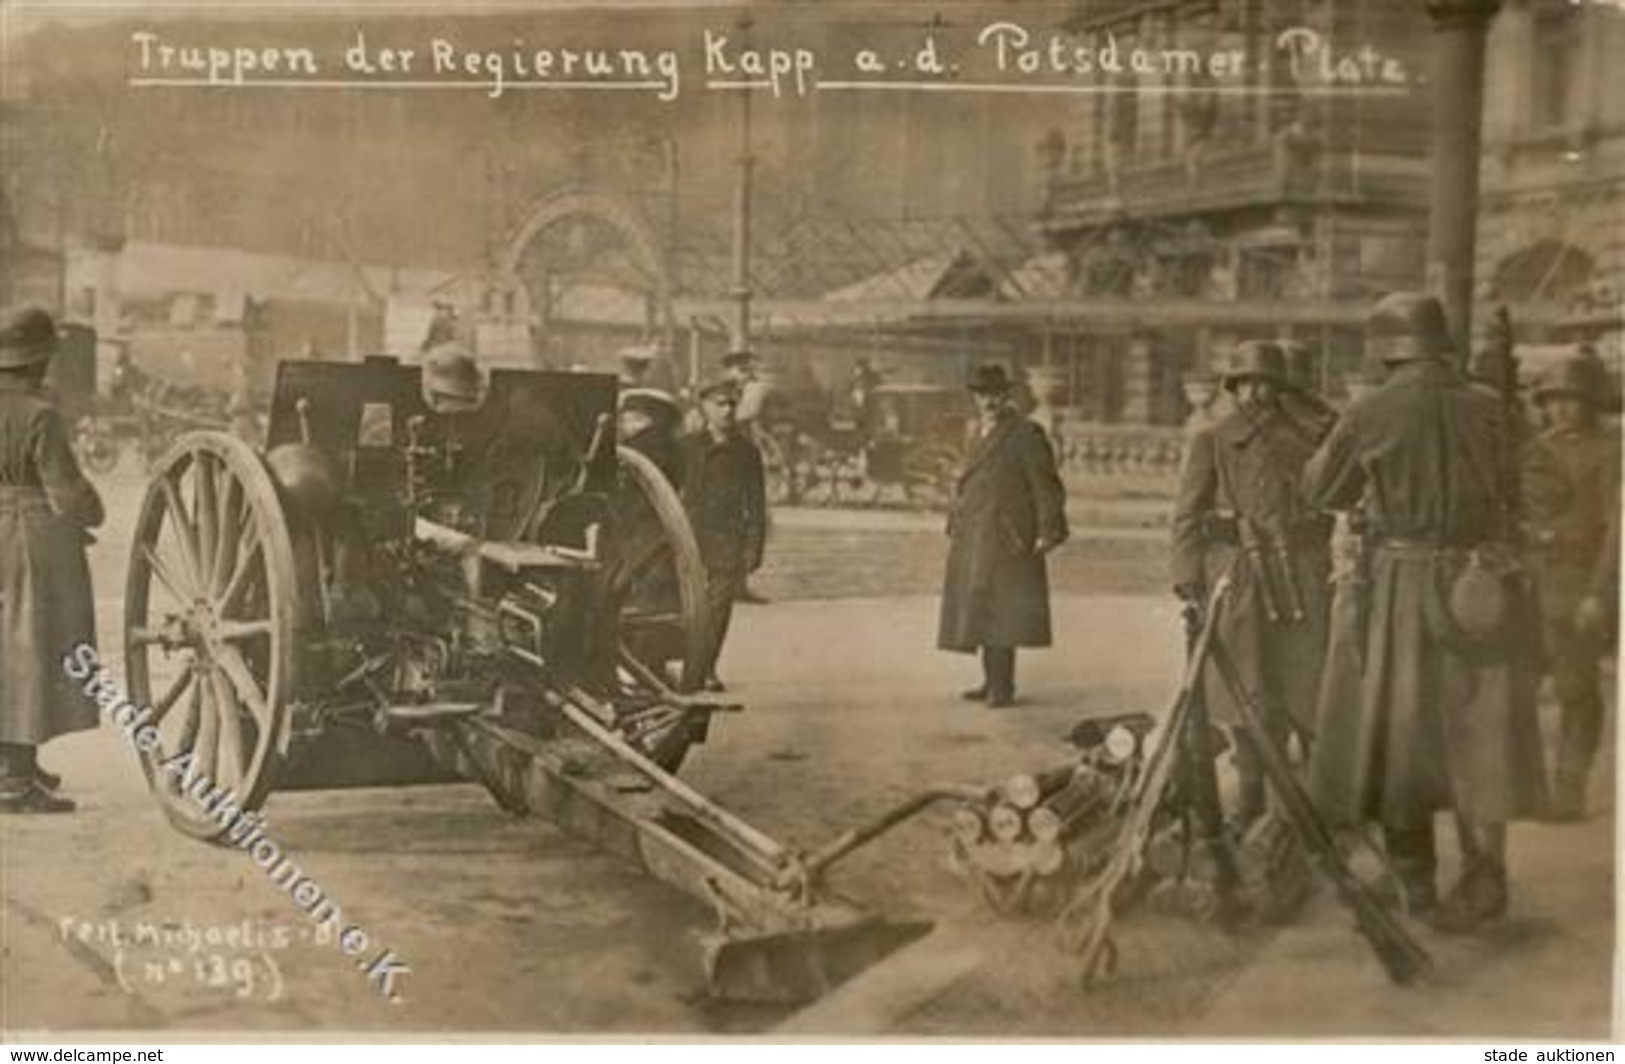 REVOLUTION BERLIN 1918/1919 - Fotokarte -TRUPPEN Der Regierung KAPP A.d. Potsdamer Platz I-II - Histoire